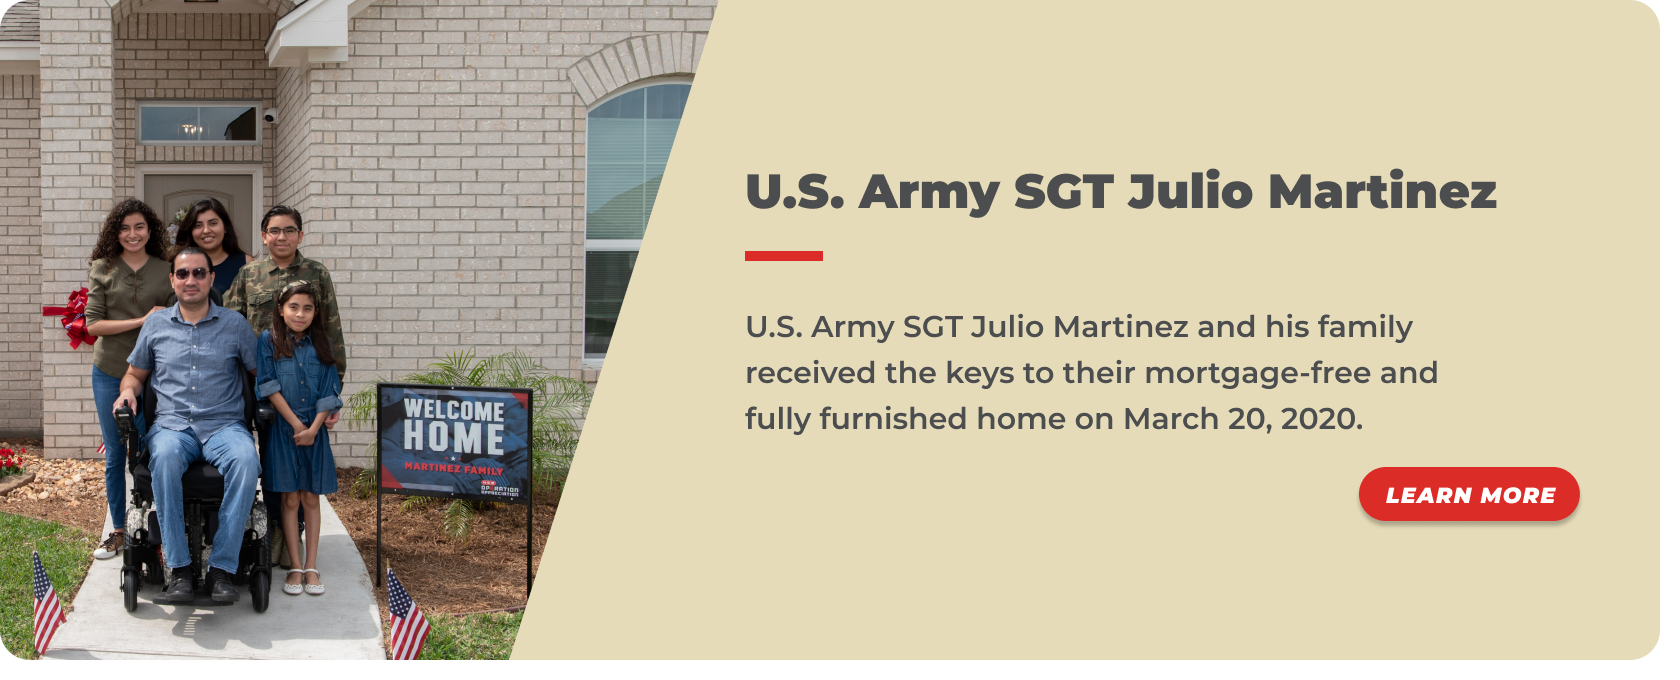 27 -U.S. Army SGT Julio Martinez 